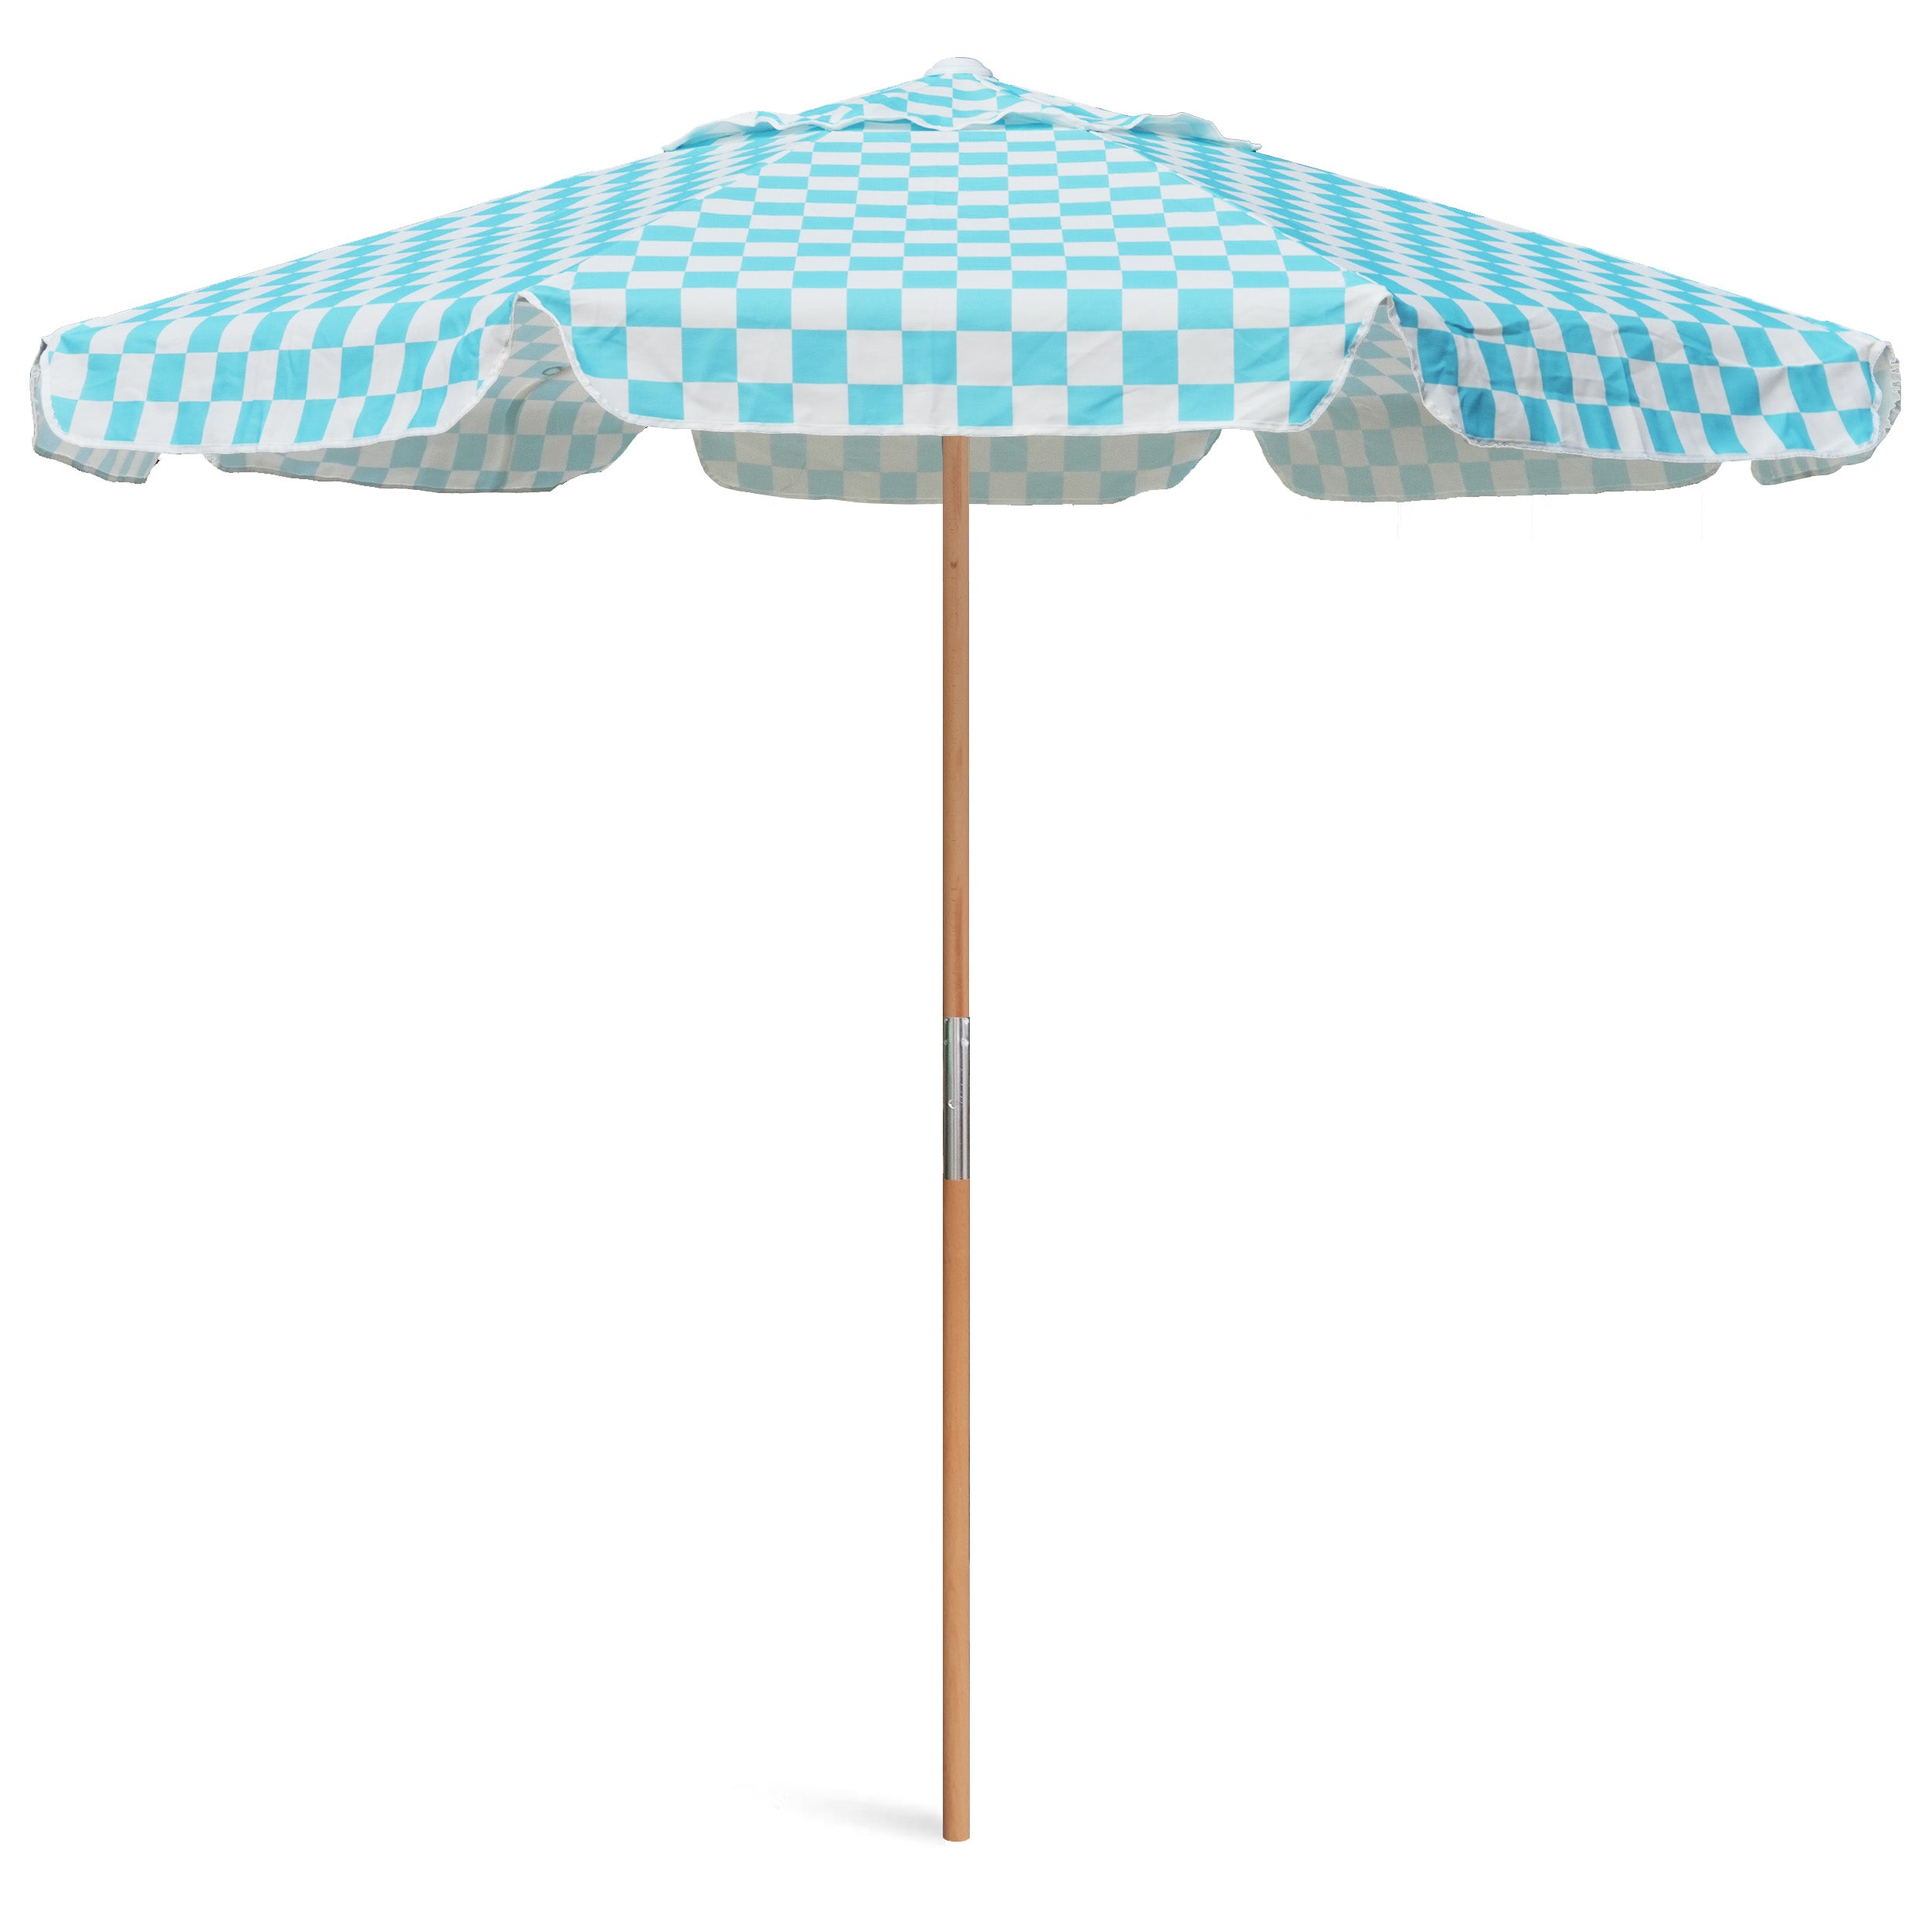 AMMSUN 7.8ft Beach & Patio Umbrella light blue check